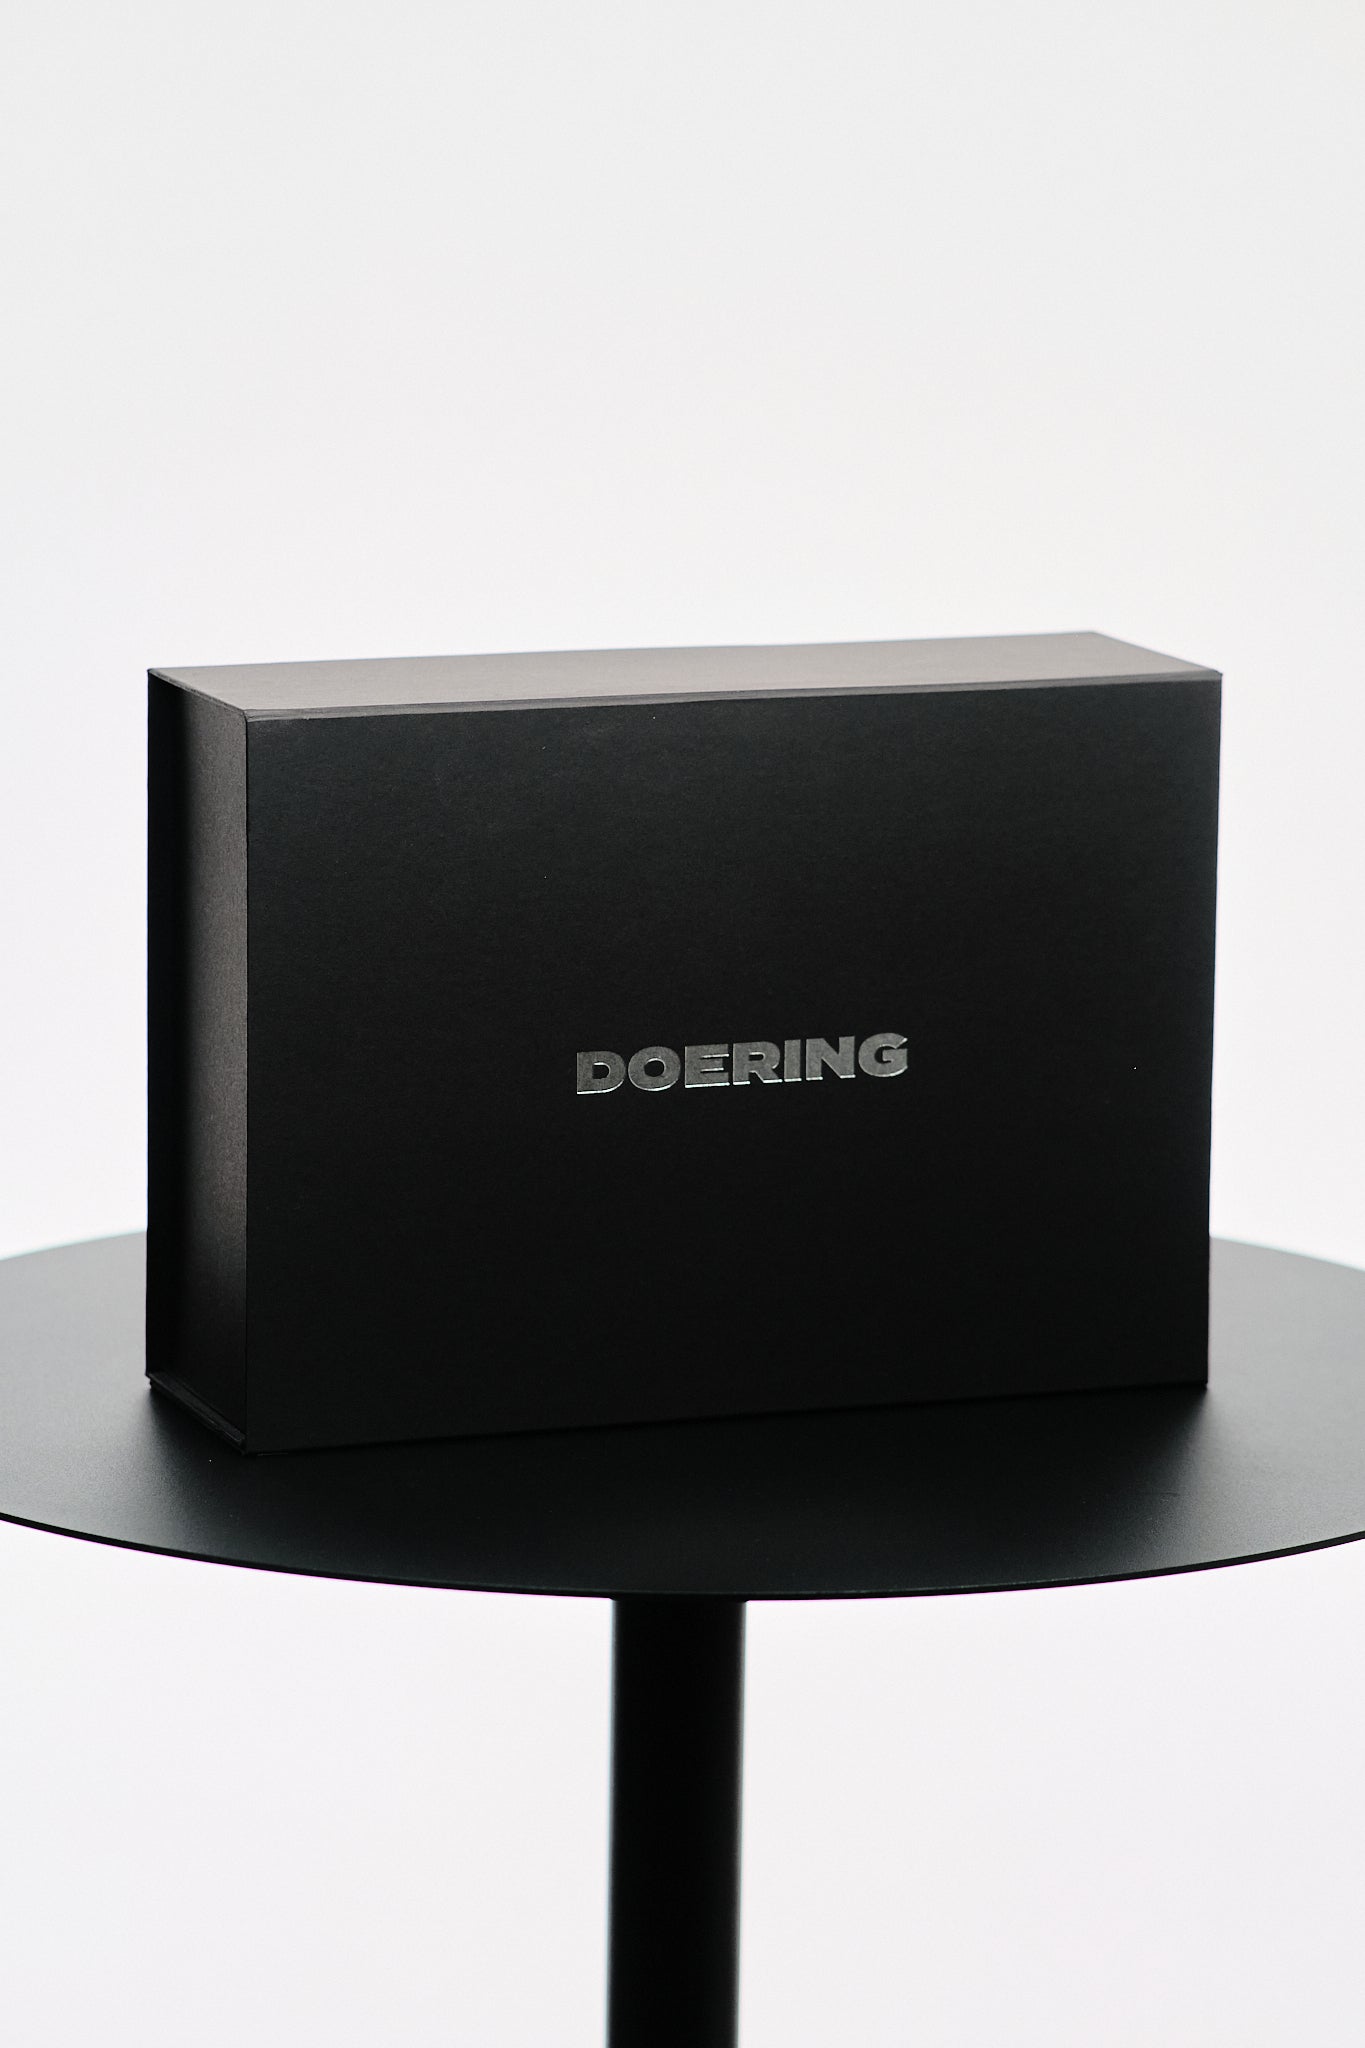 "The Box" - Doering